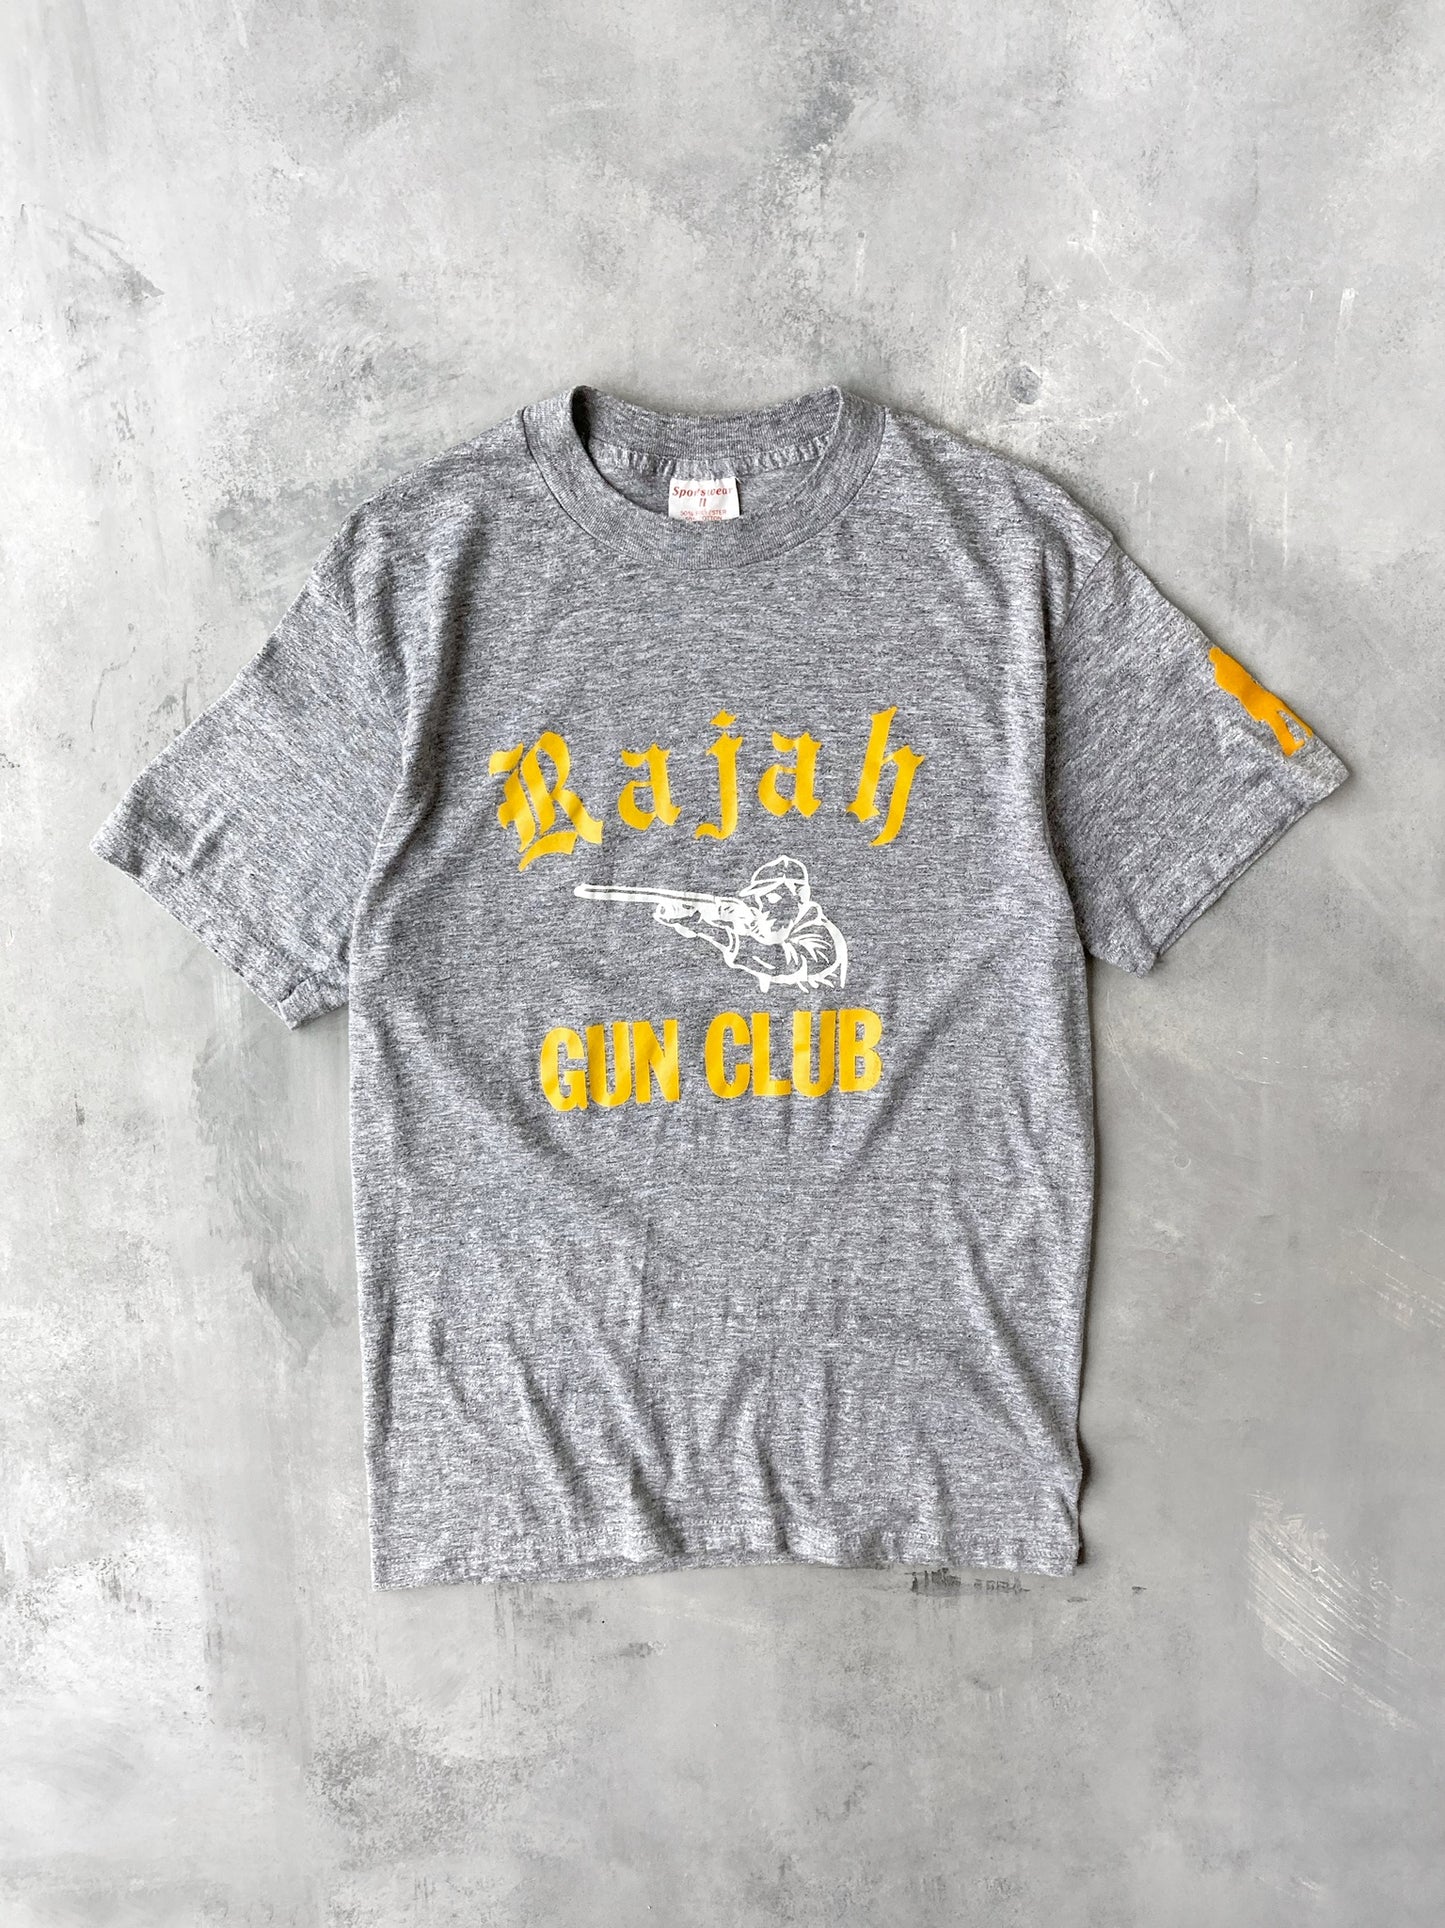 Rajah Gun Club T-Shirt 80's - Medium